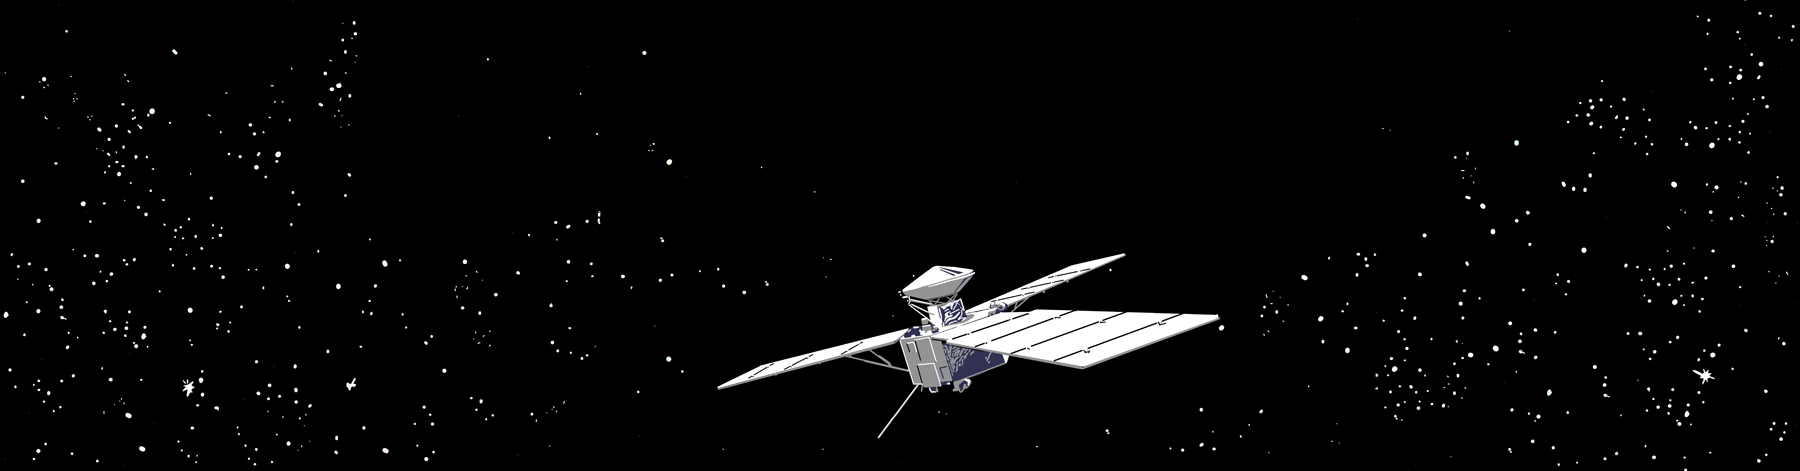 Juno spacecraft among the stars